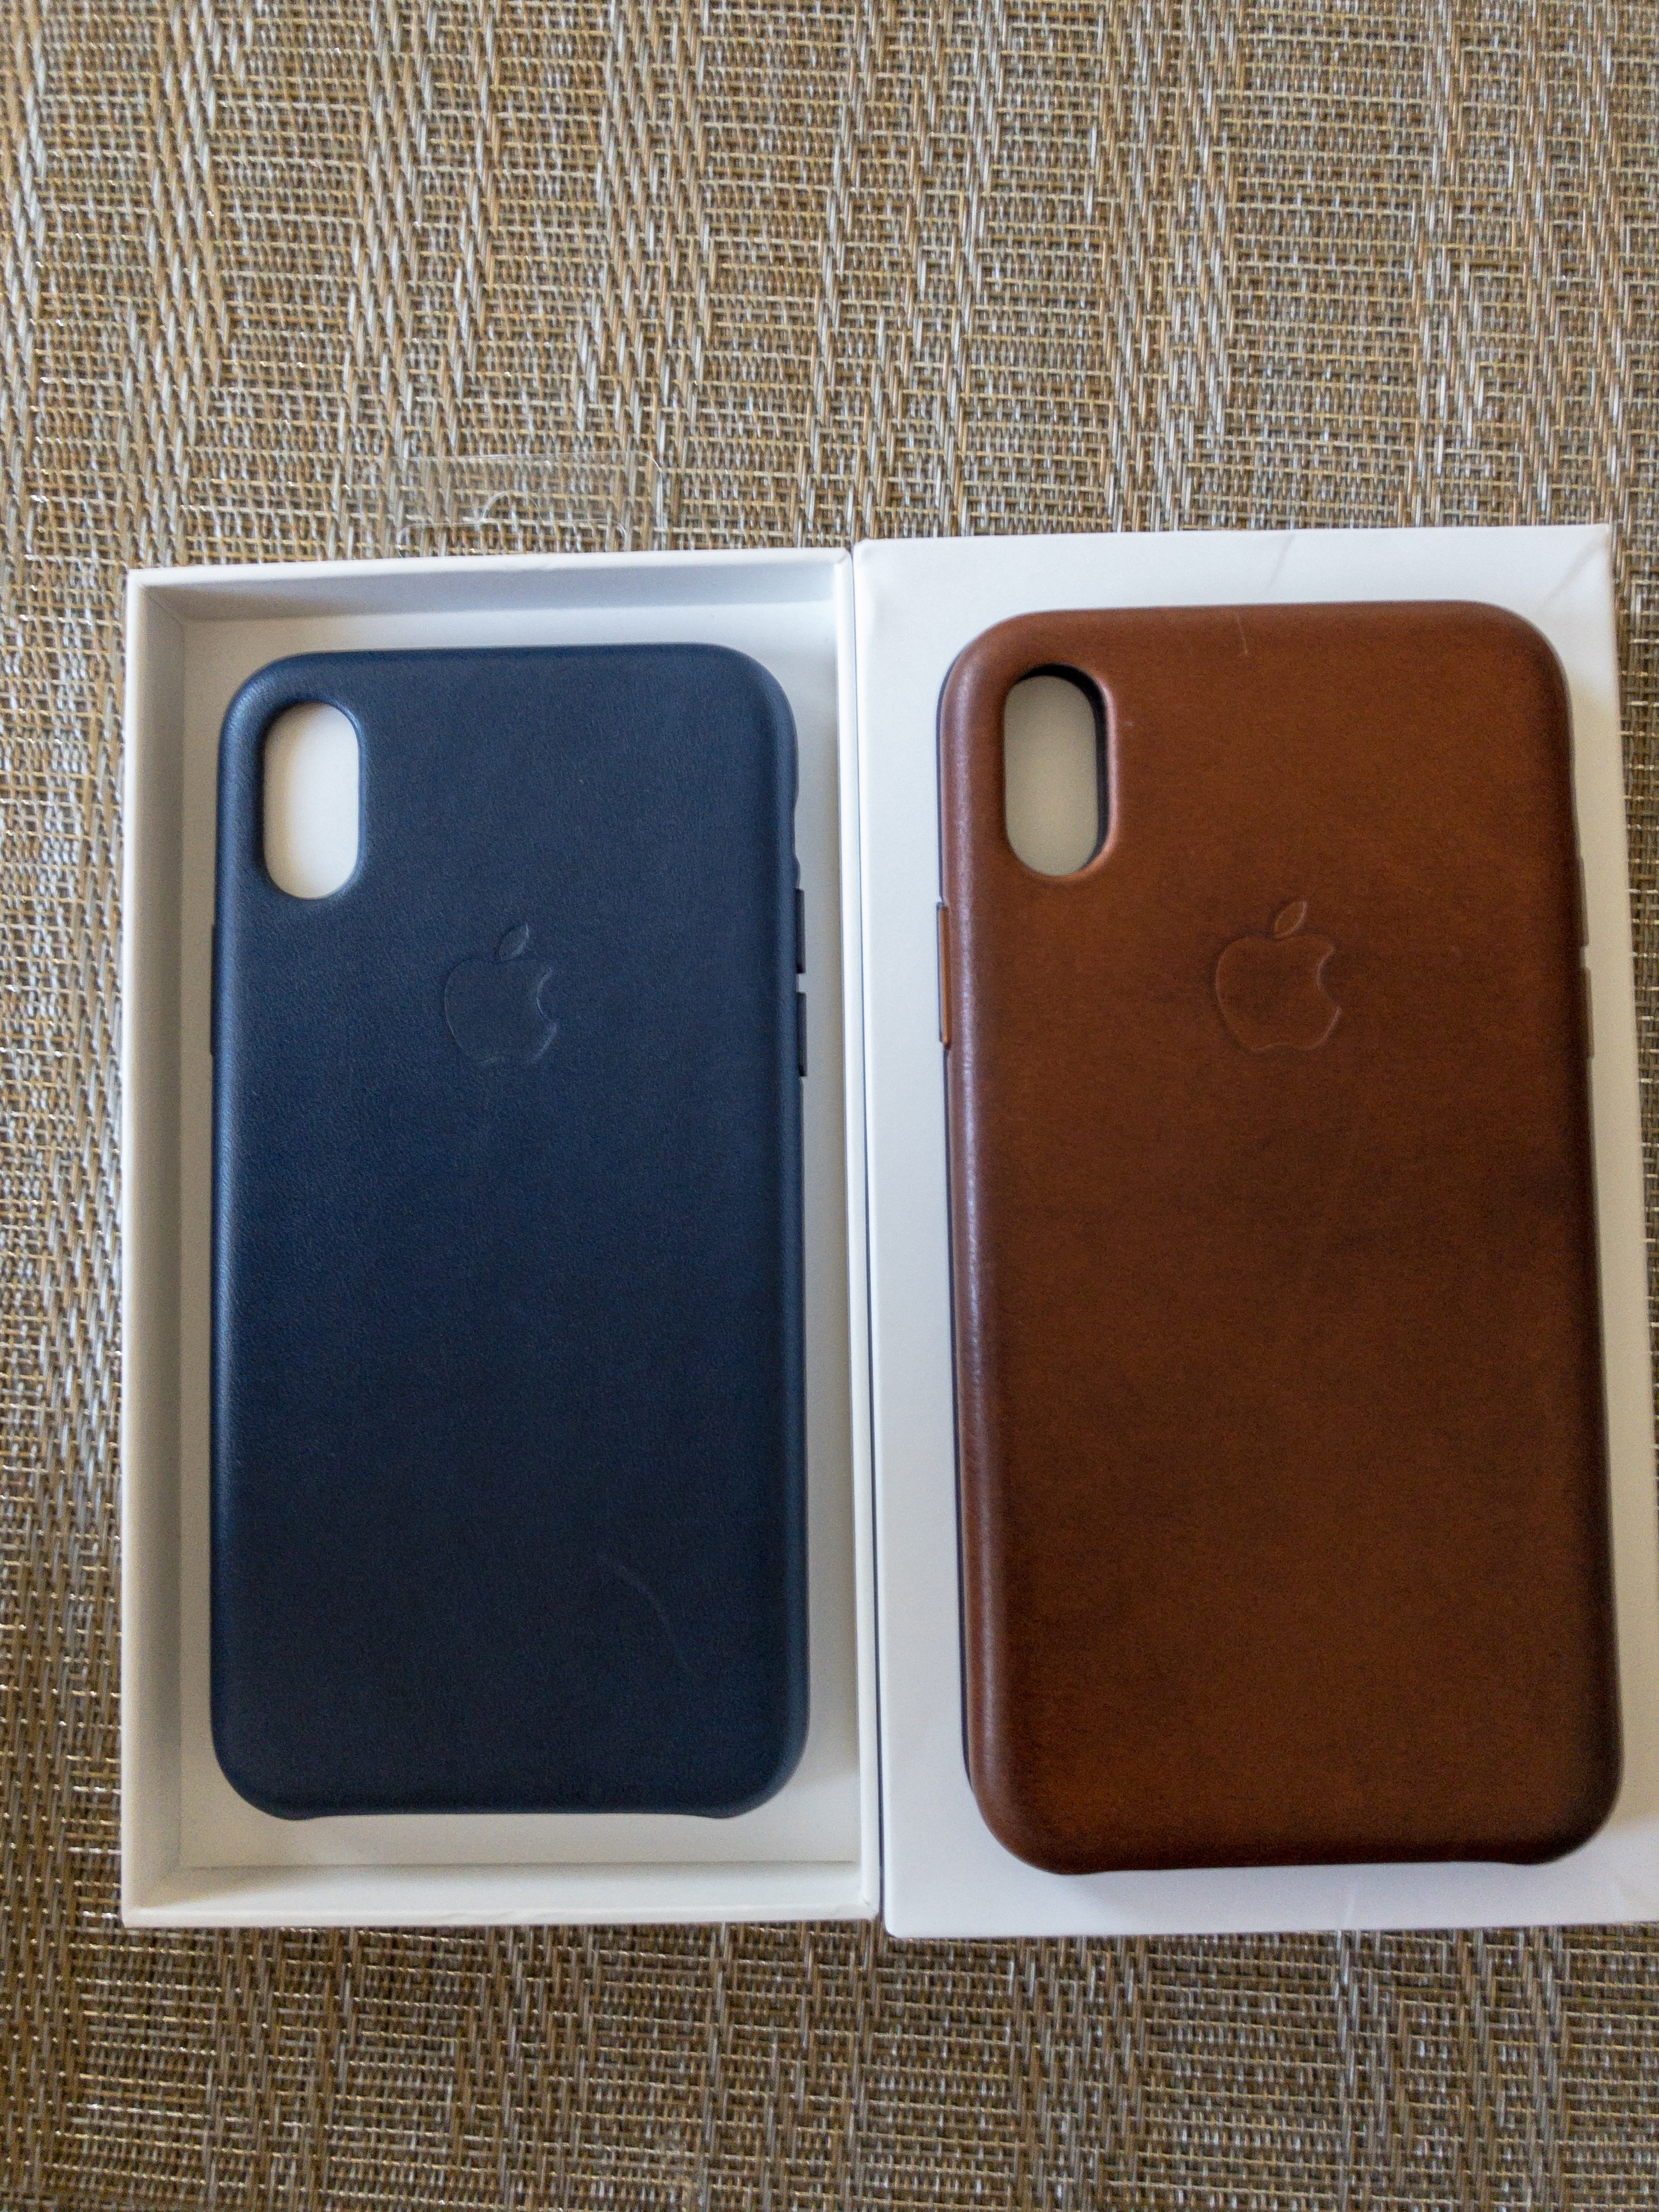 Apple Leather Cases Patina Proud Photos Macrumors Forums